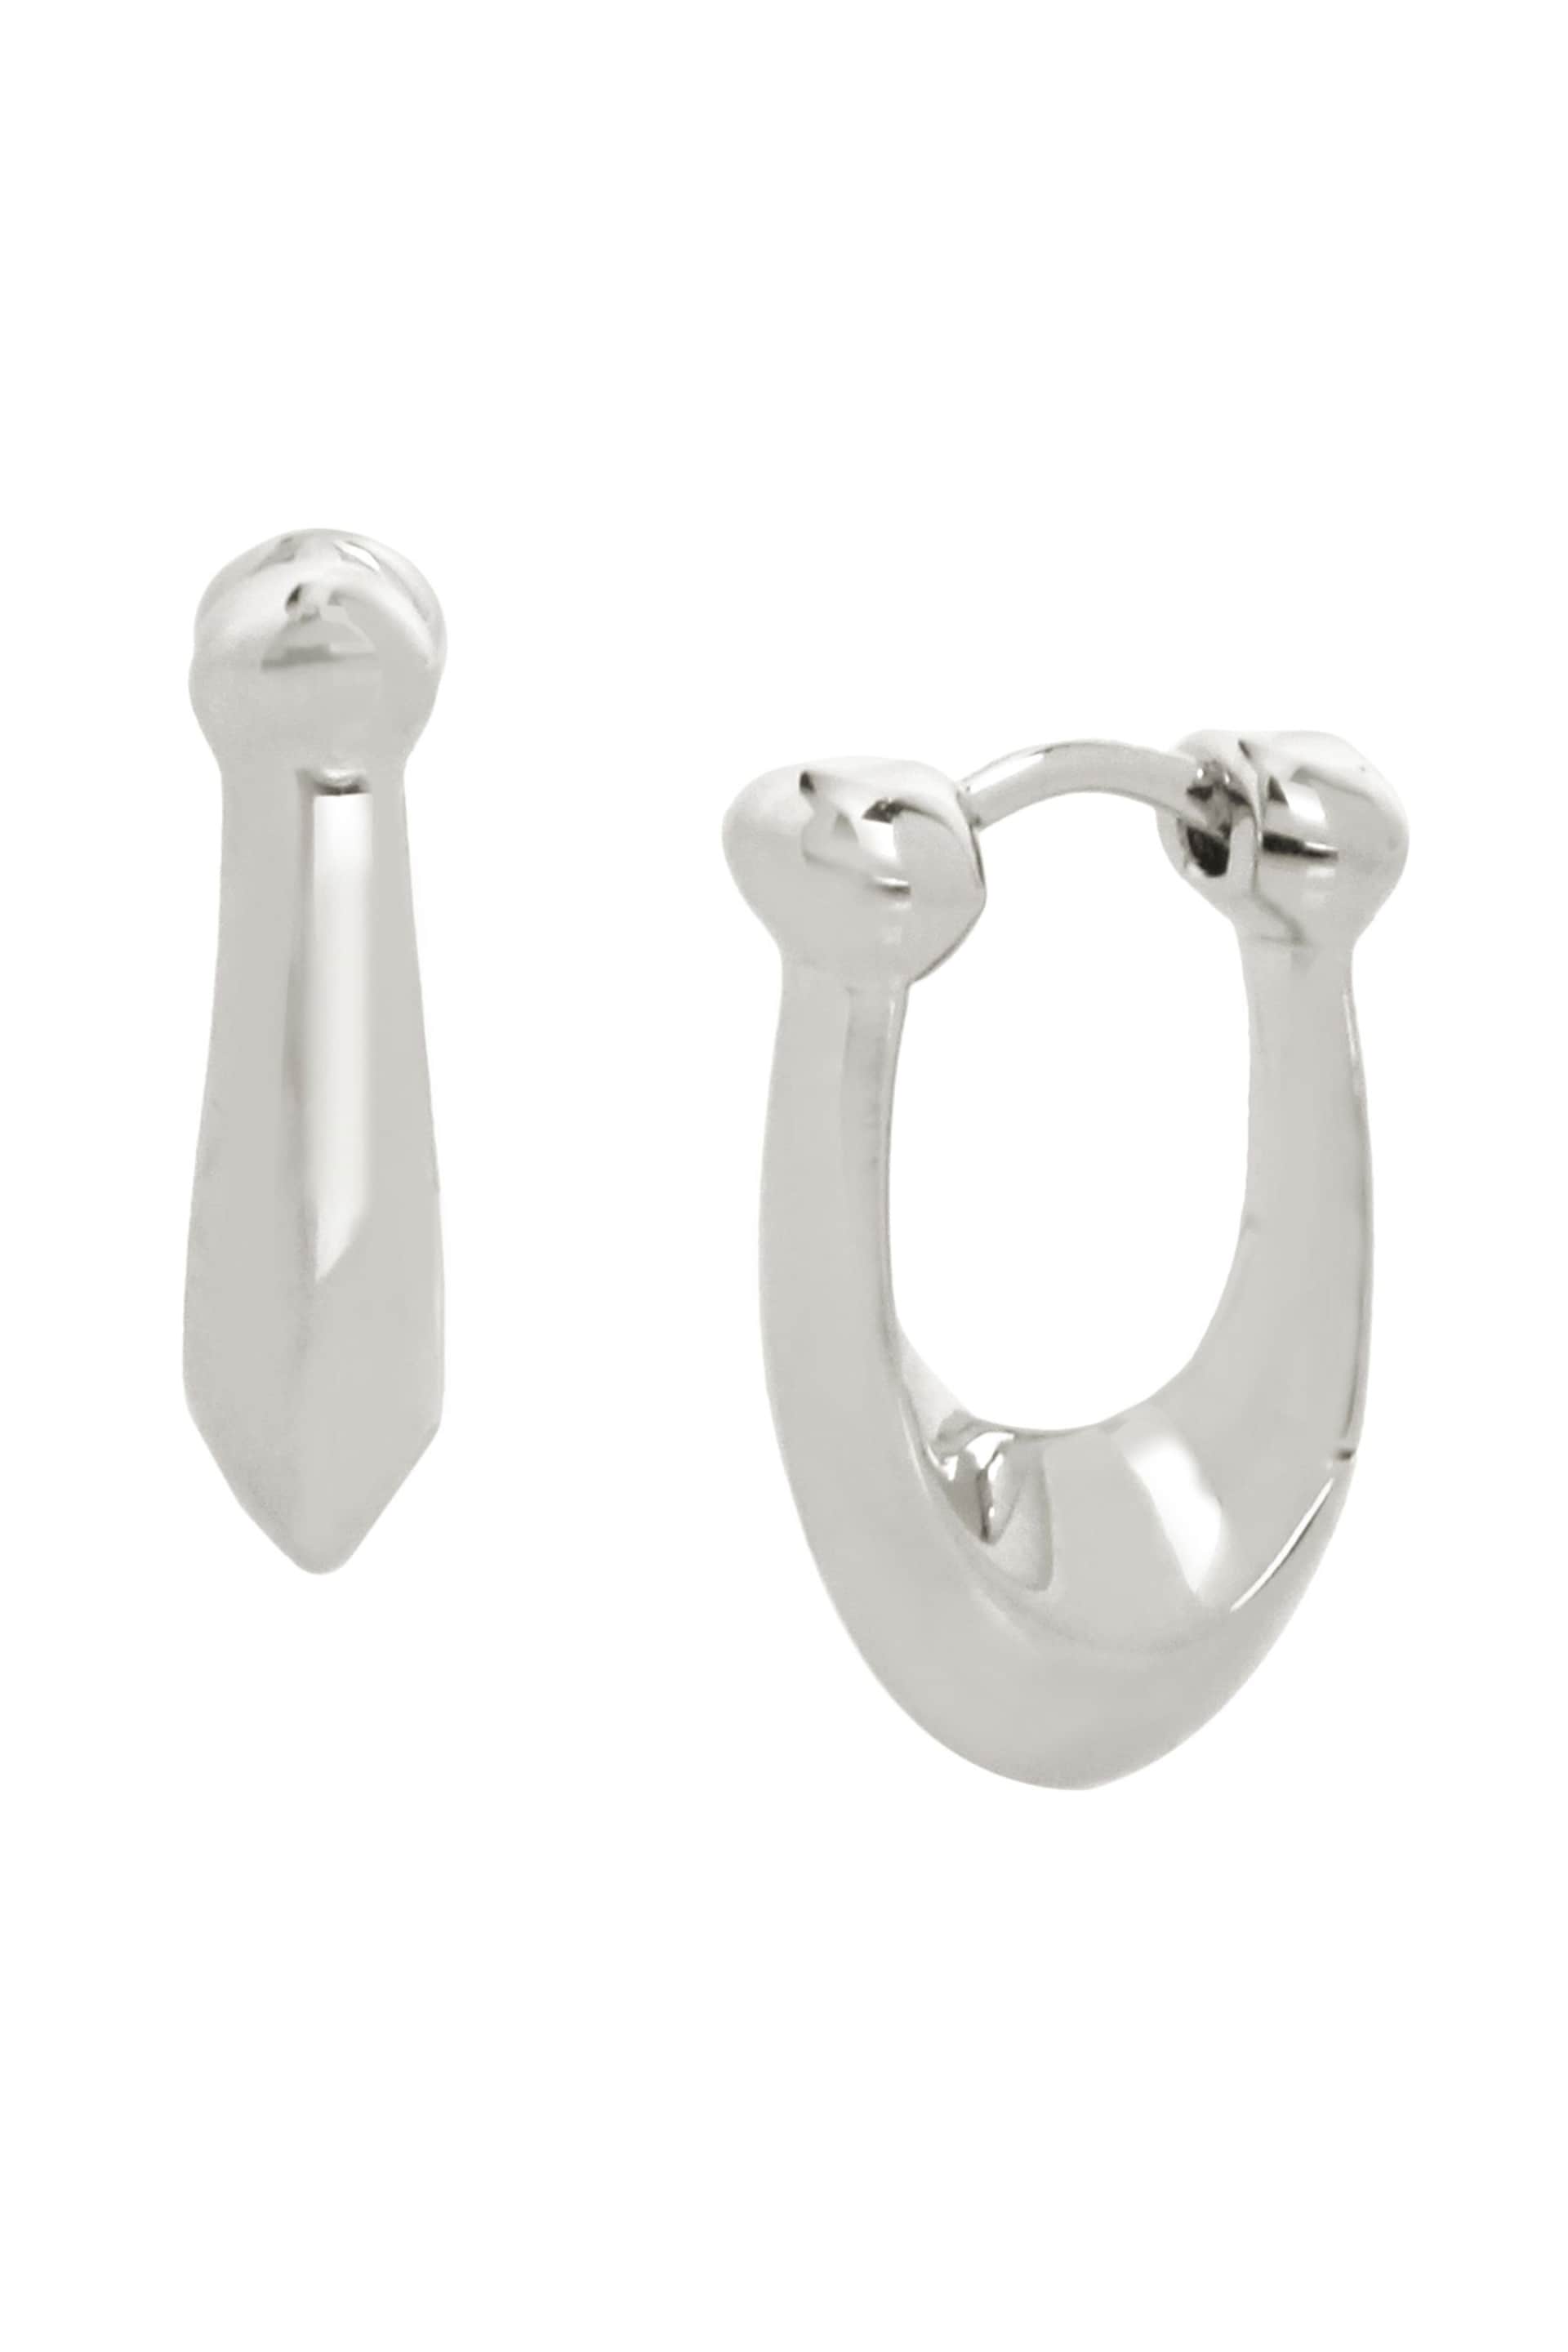 COACH Silver Tone Signature C Huggie Earrings - Image 1 of 3